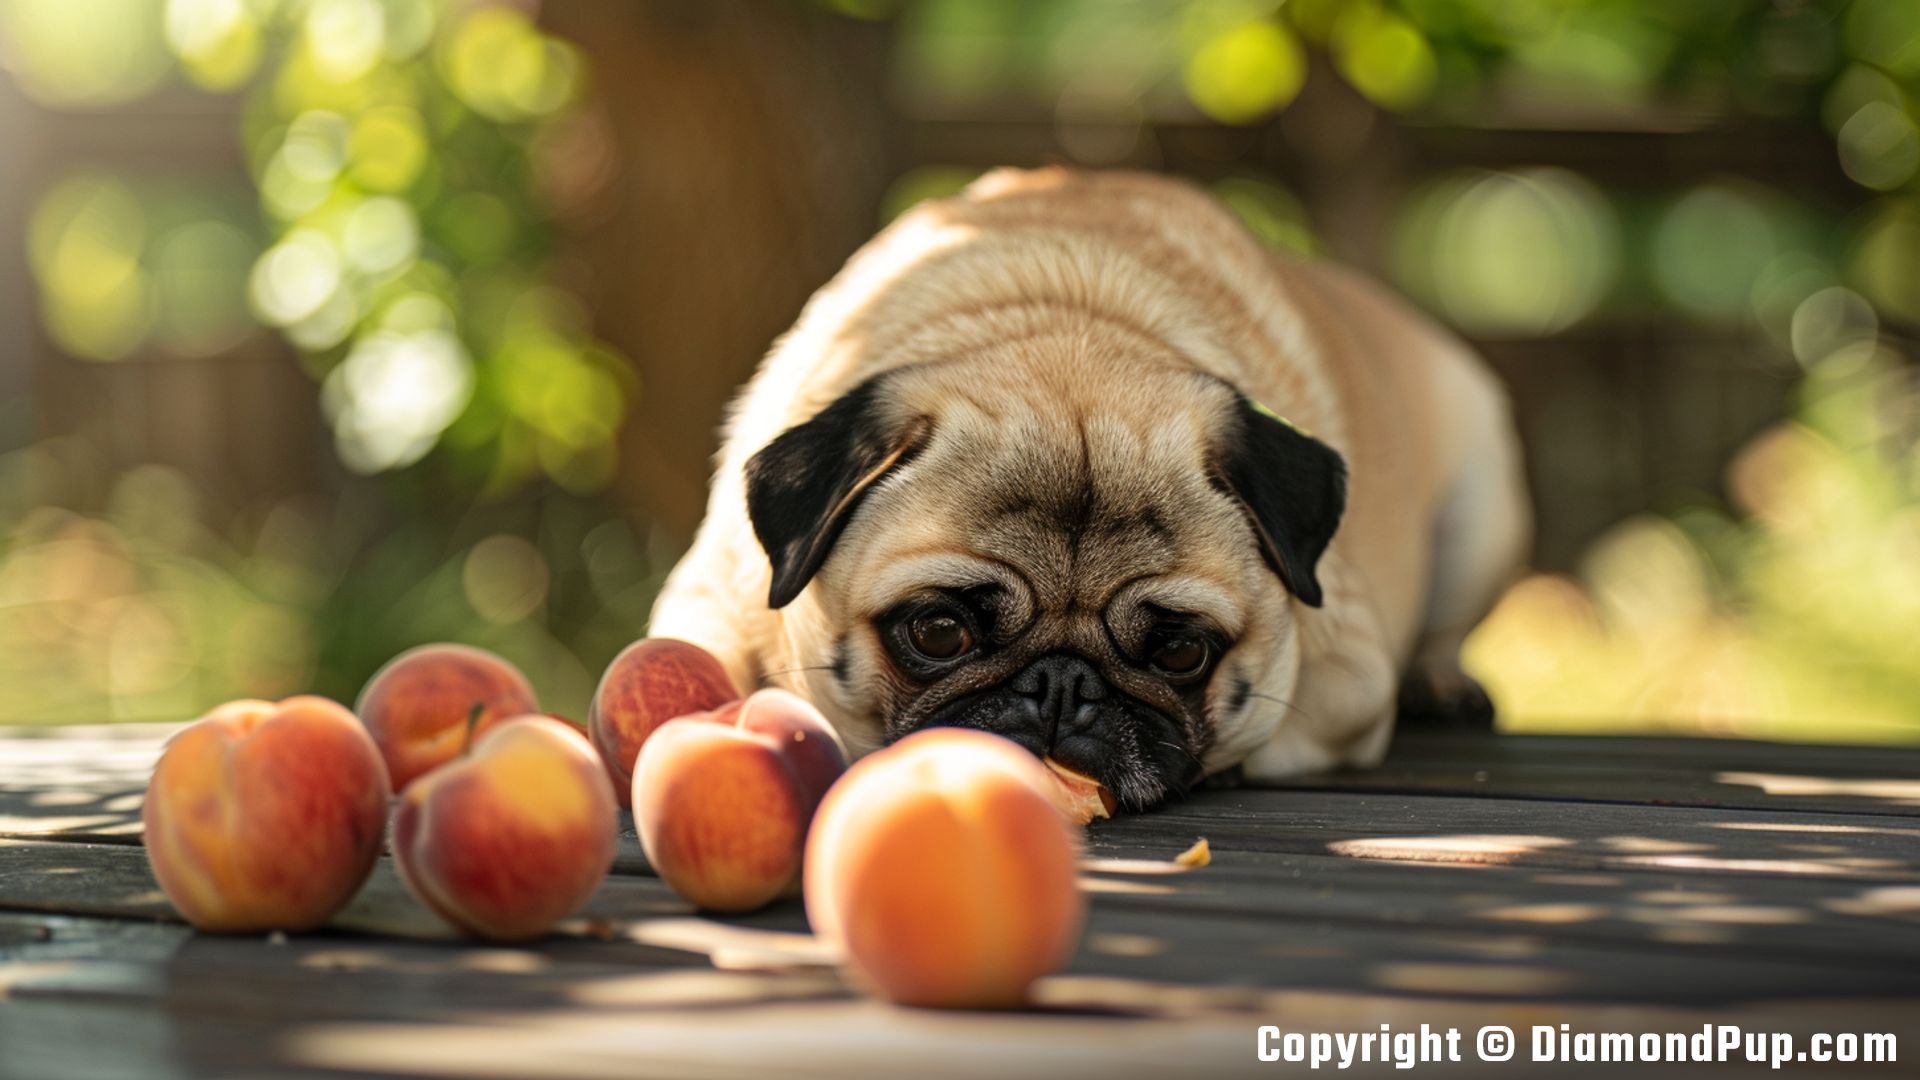 Photograph of an Adorable Pug Eating Peaches